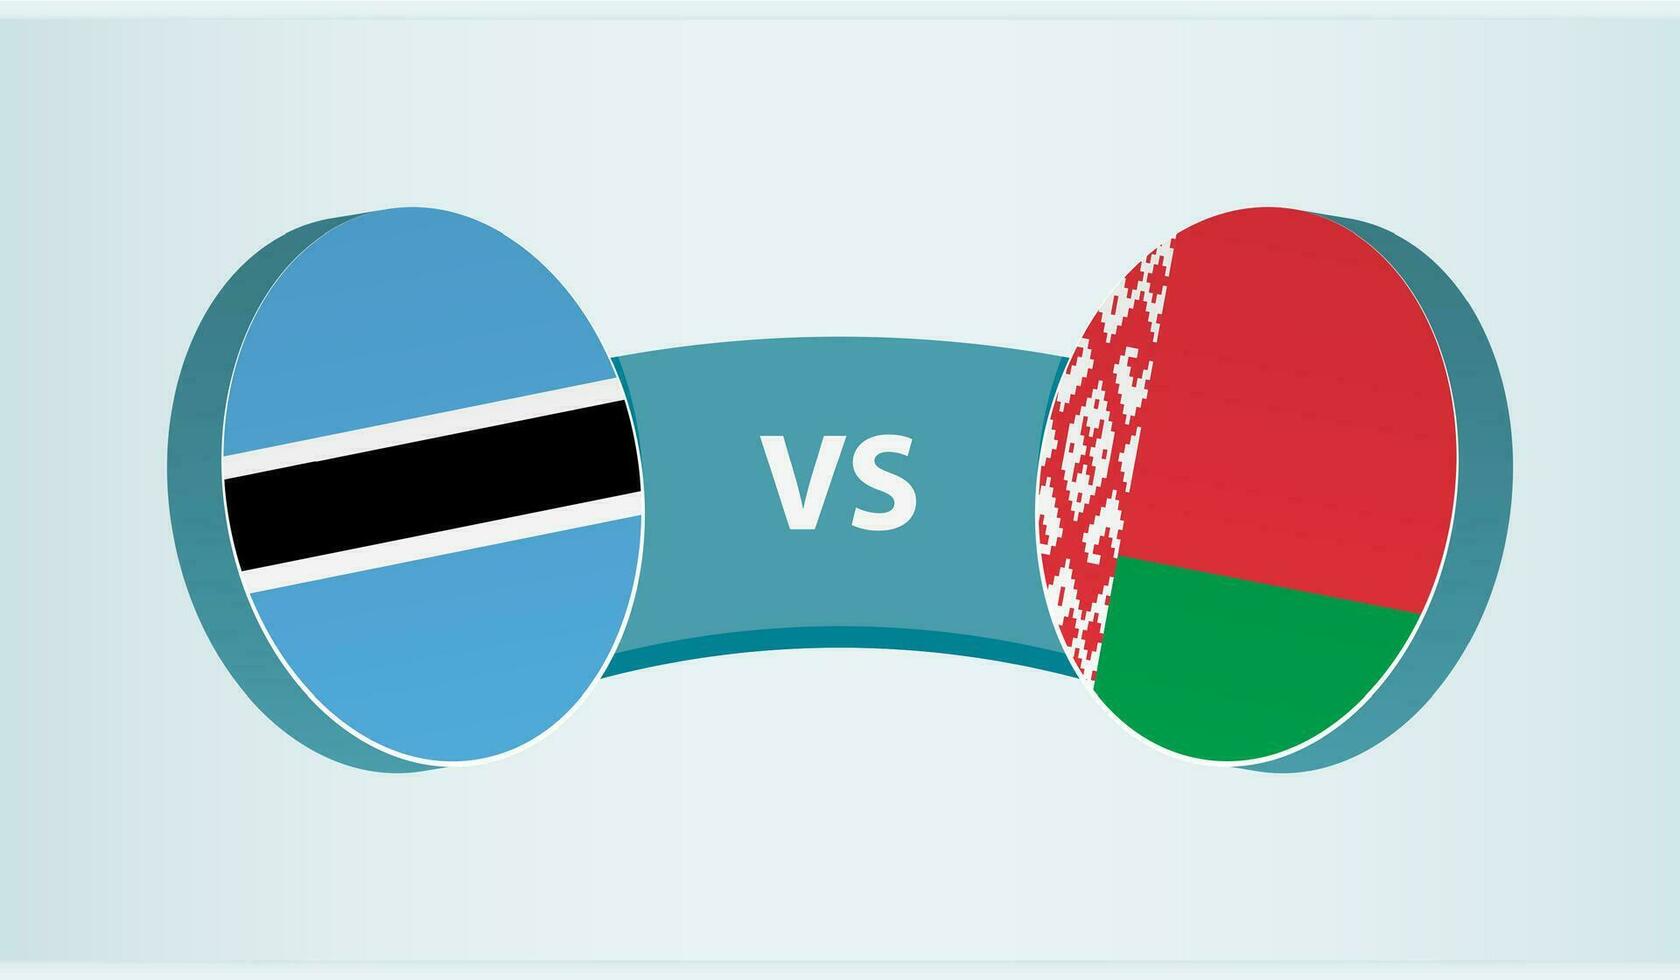 Botswana versus Belarus, team sports competition concept. vector